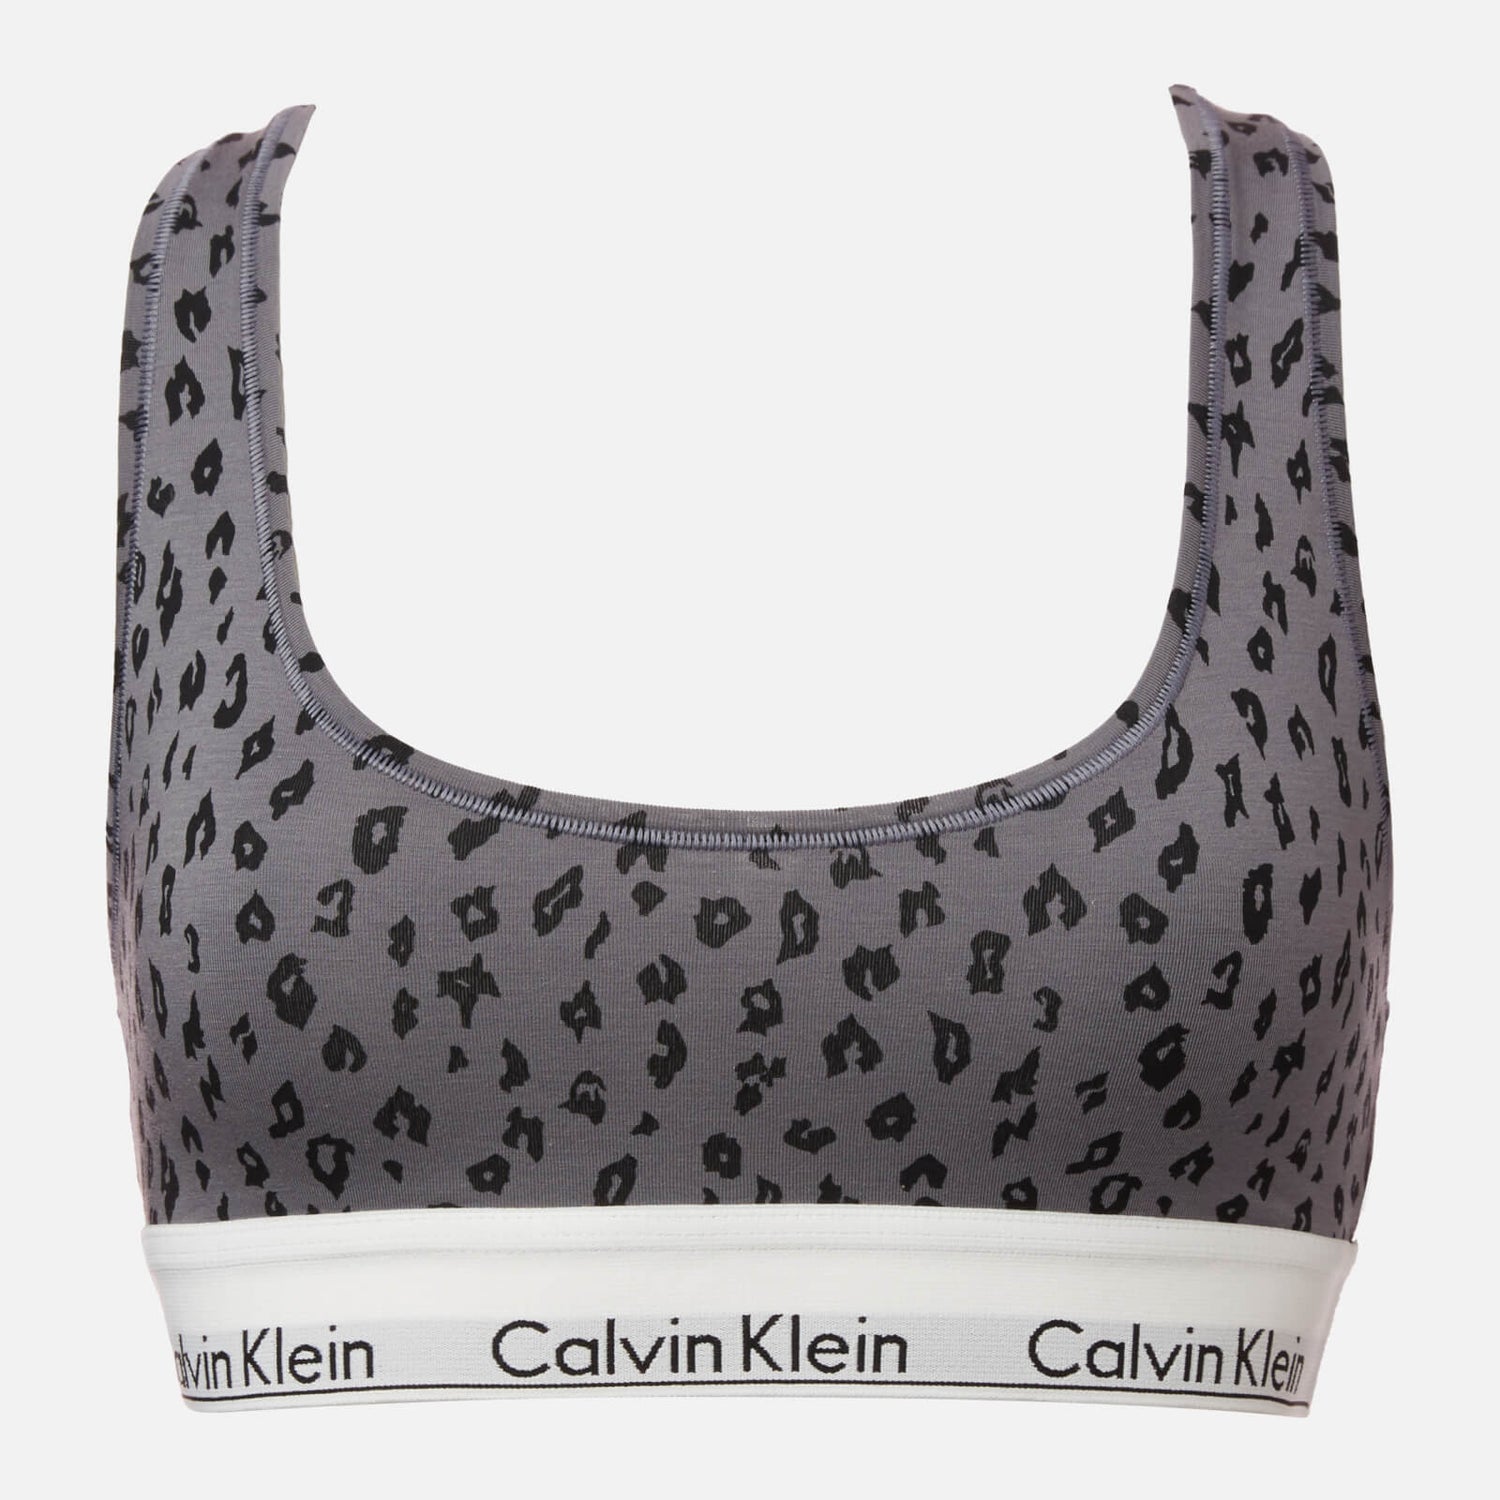 Calvin Klein Women's Cheetah Print Unlined Bralette - Pewter | TheHut.com